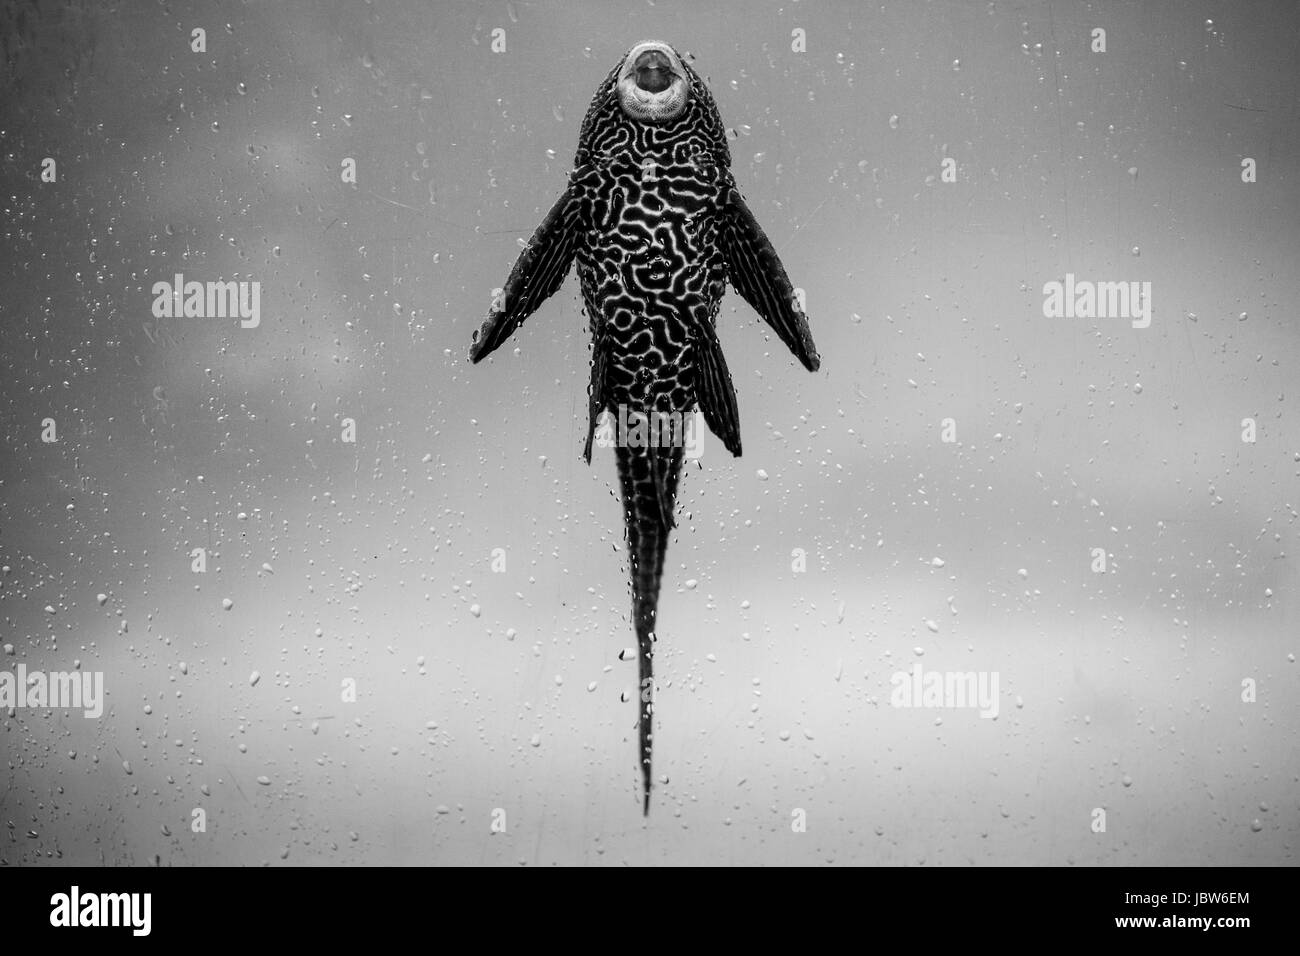 ancistrus fish - black and white animals portraits Stock Photo